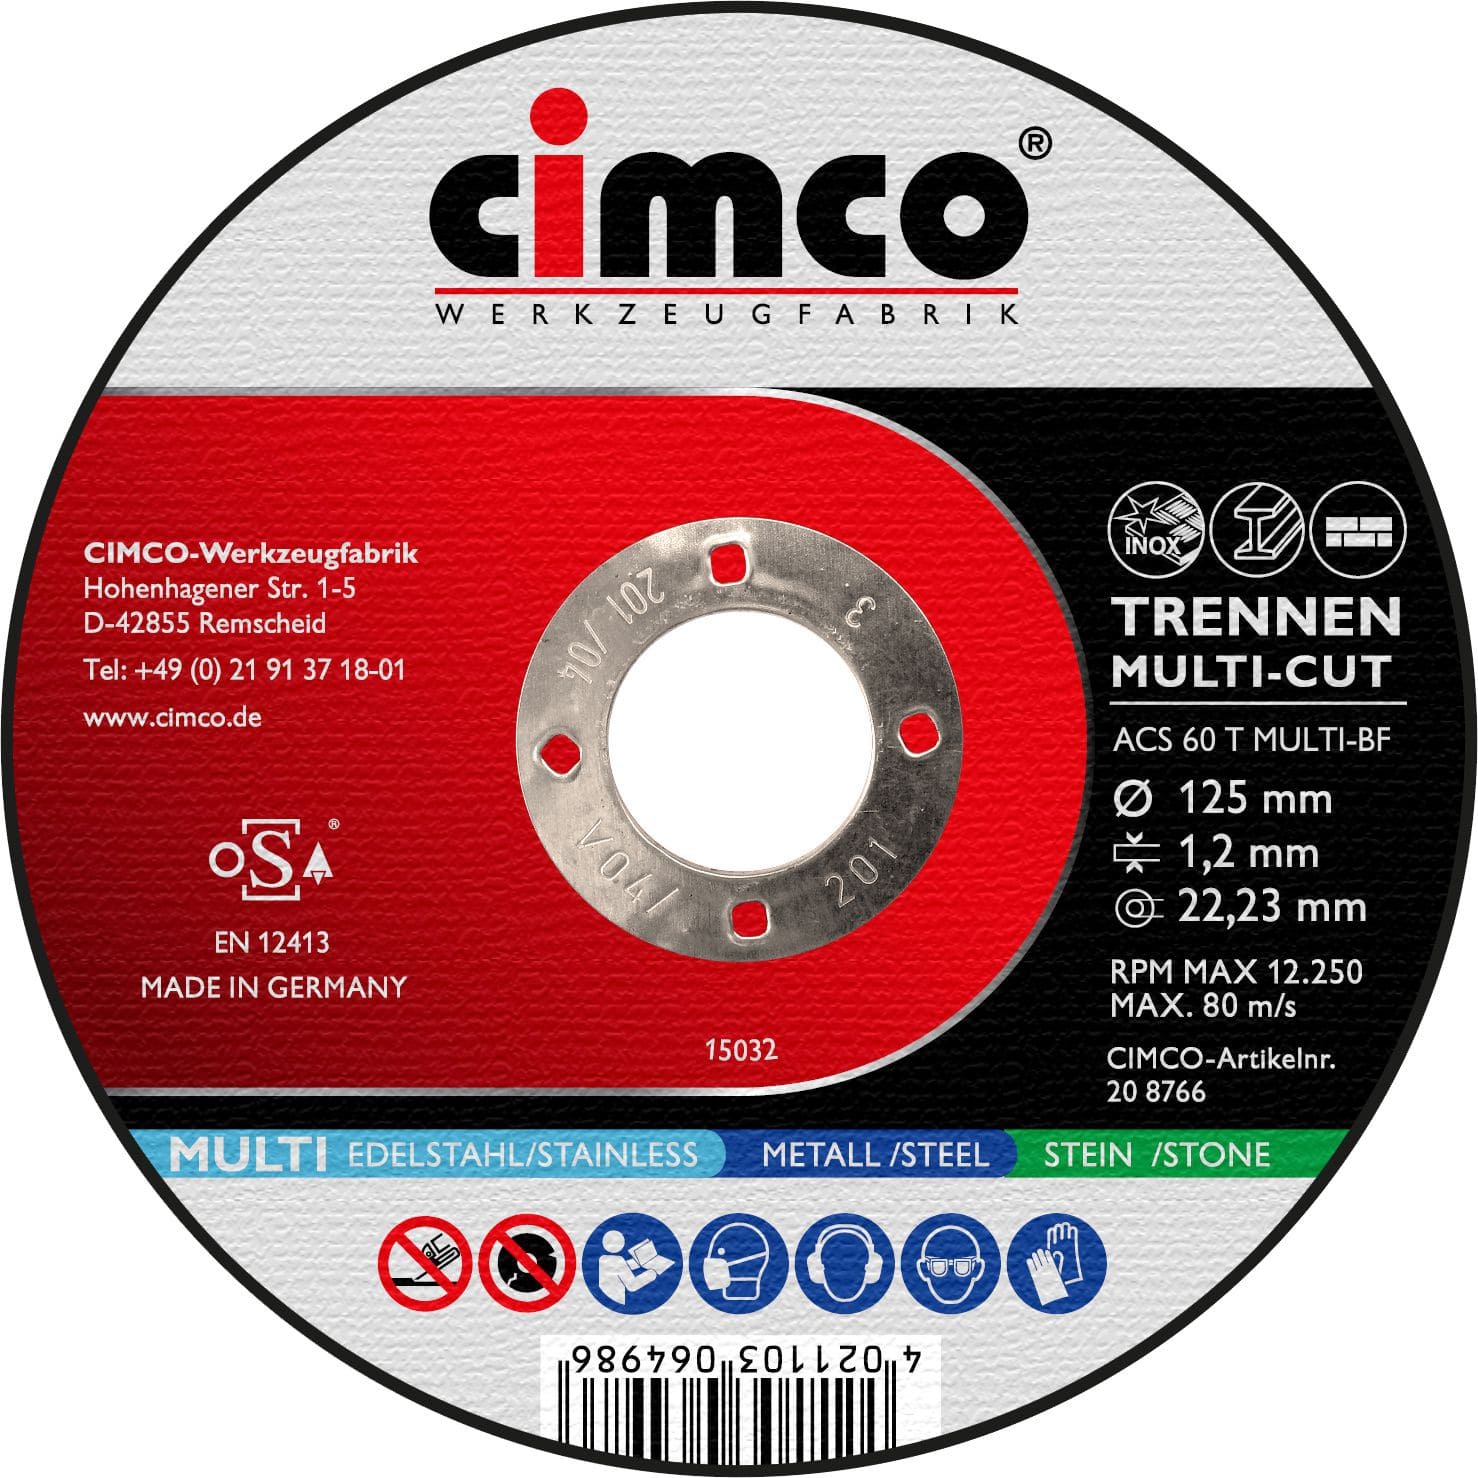 Cimco 20 8766 Korund-Trennscheibe Multicut, gekröpft, Stärke 1,2 mm, Ø 125, Bohrung 22,23 mm